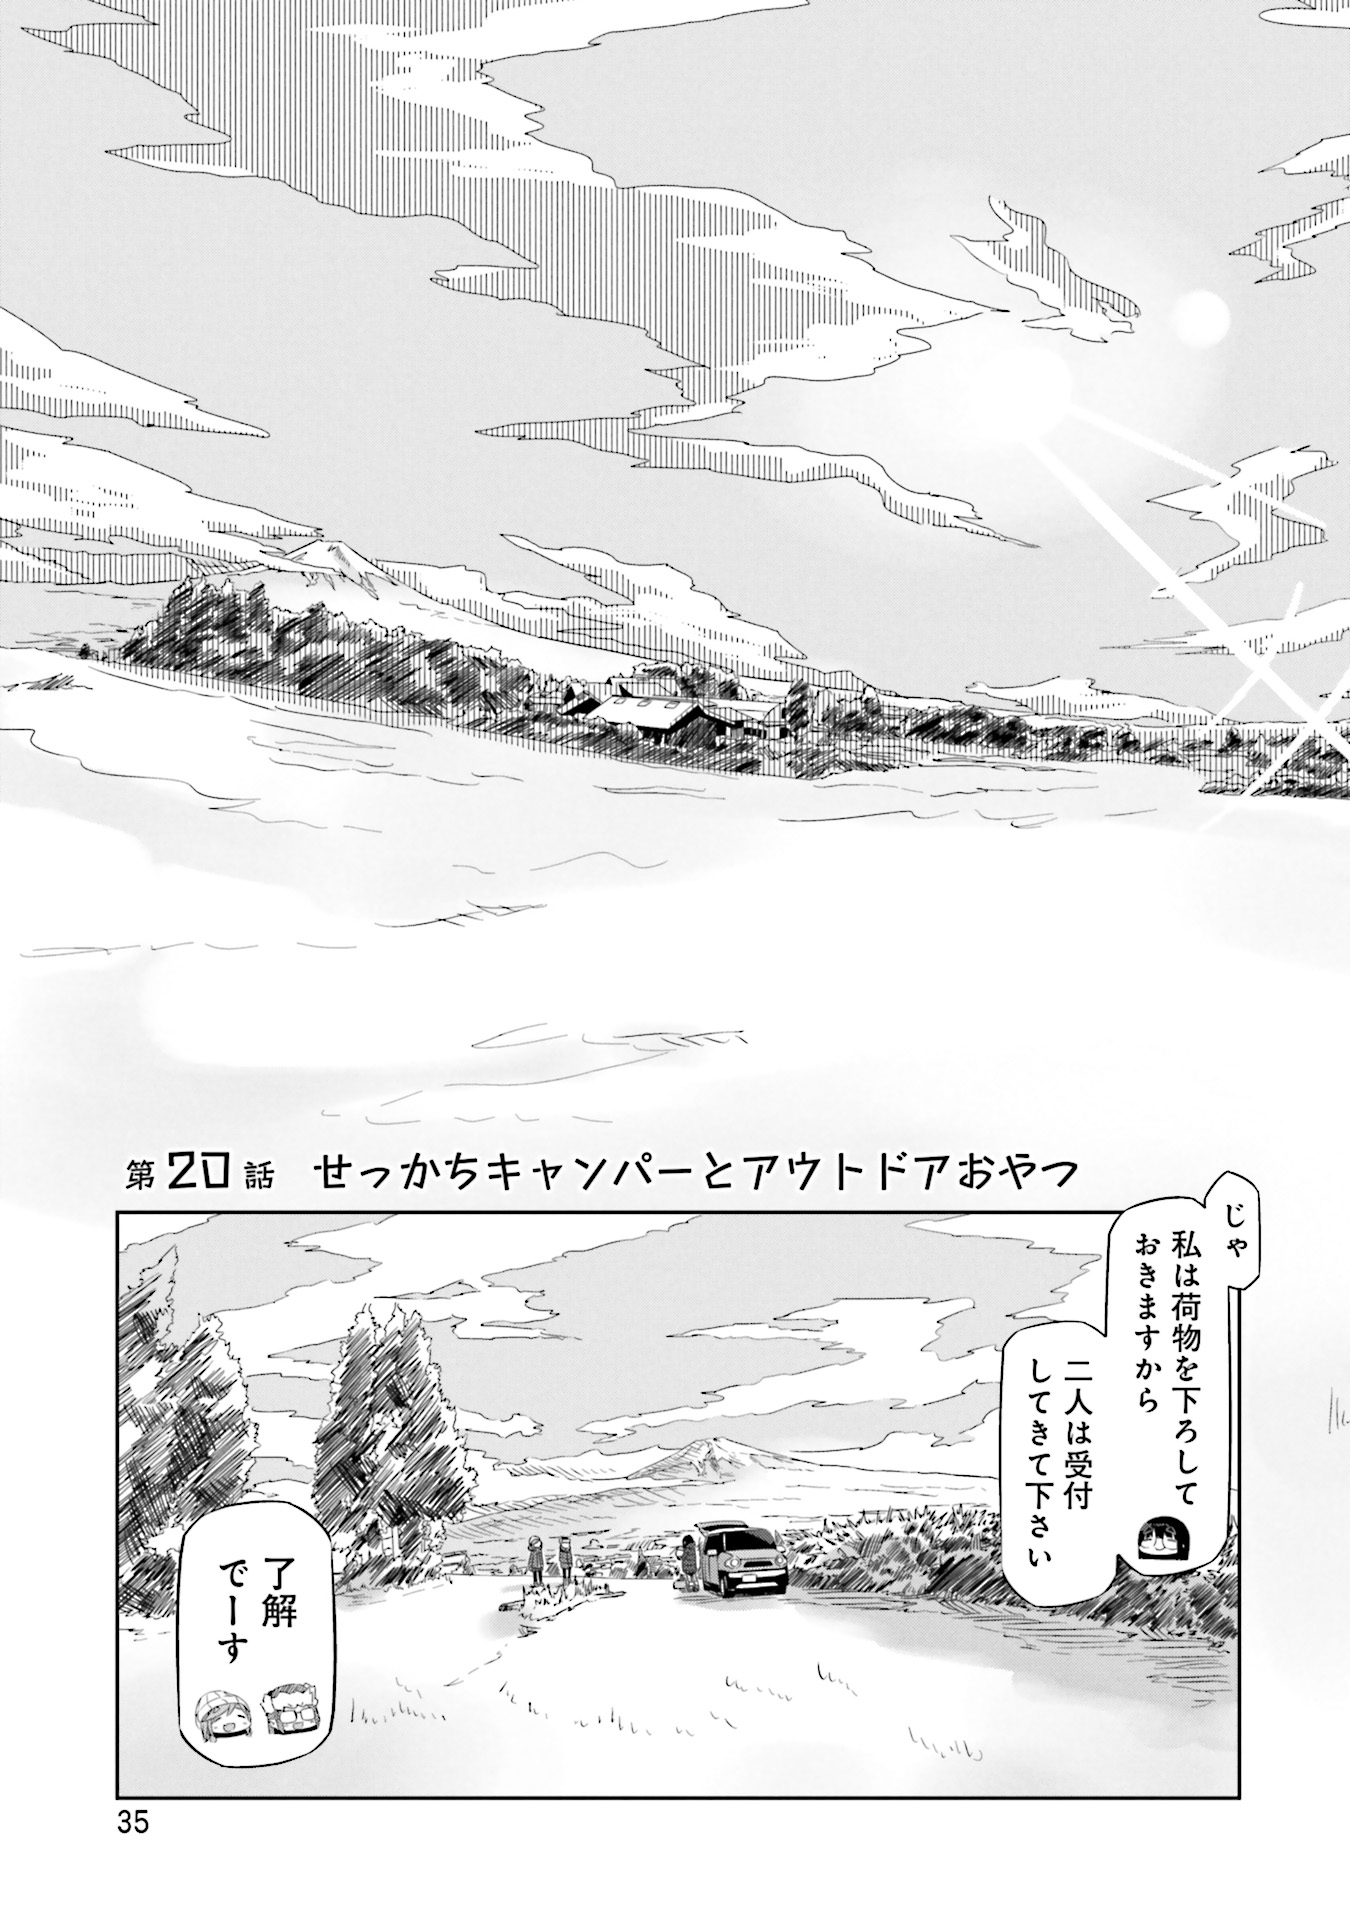 Yuru Camp - Chapter 20 - Page 3